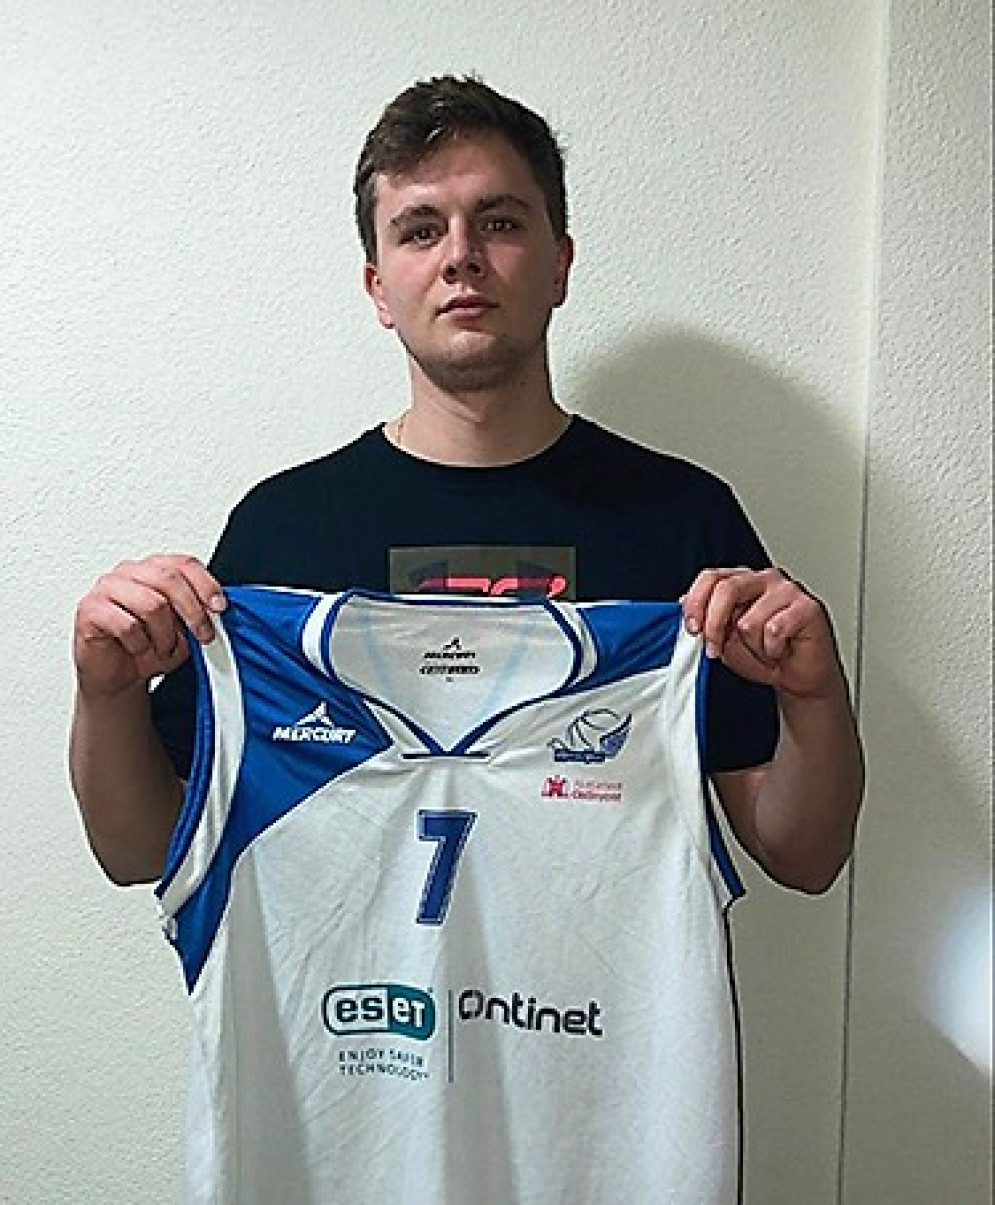 Jakub Kadasi completa l’equip de l’Eset-Ontinet